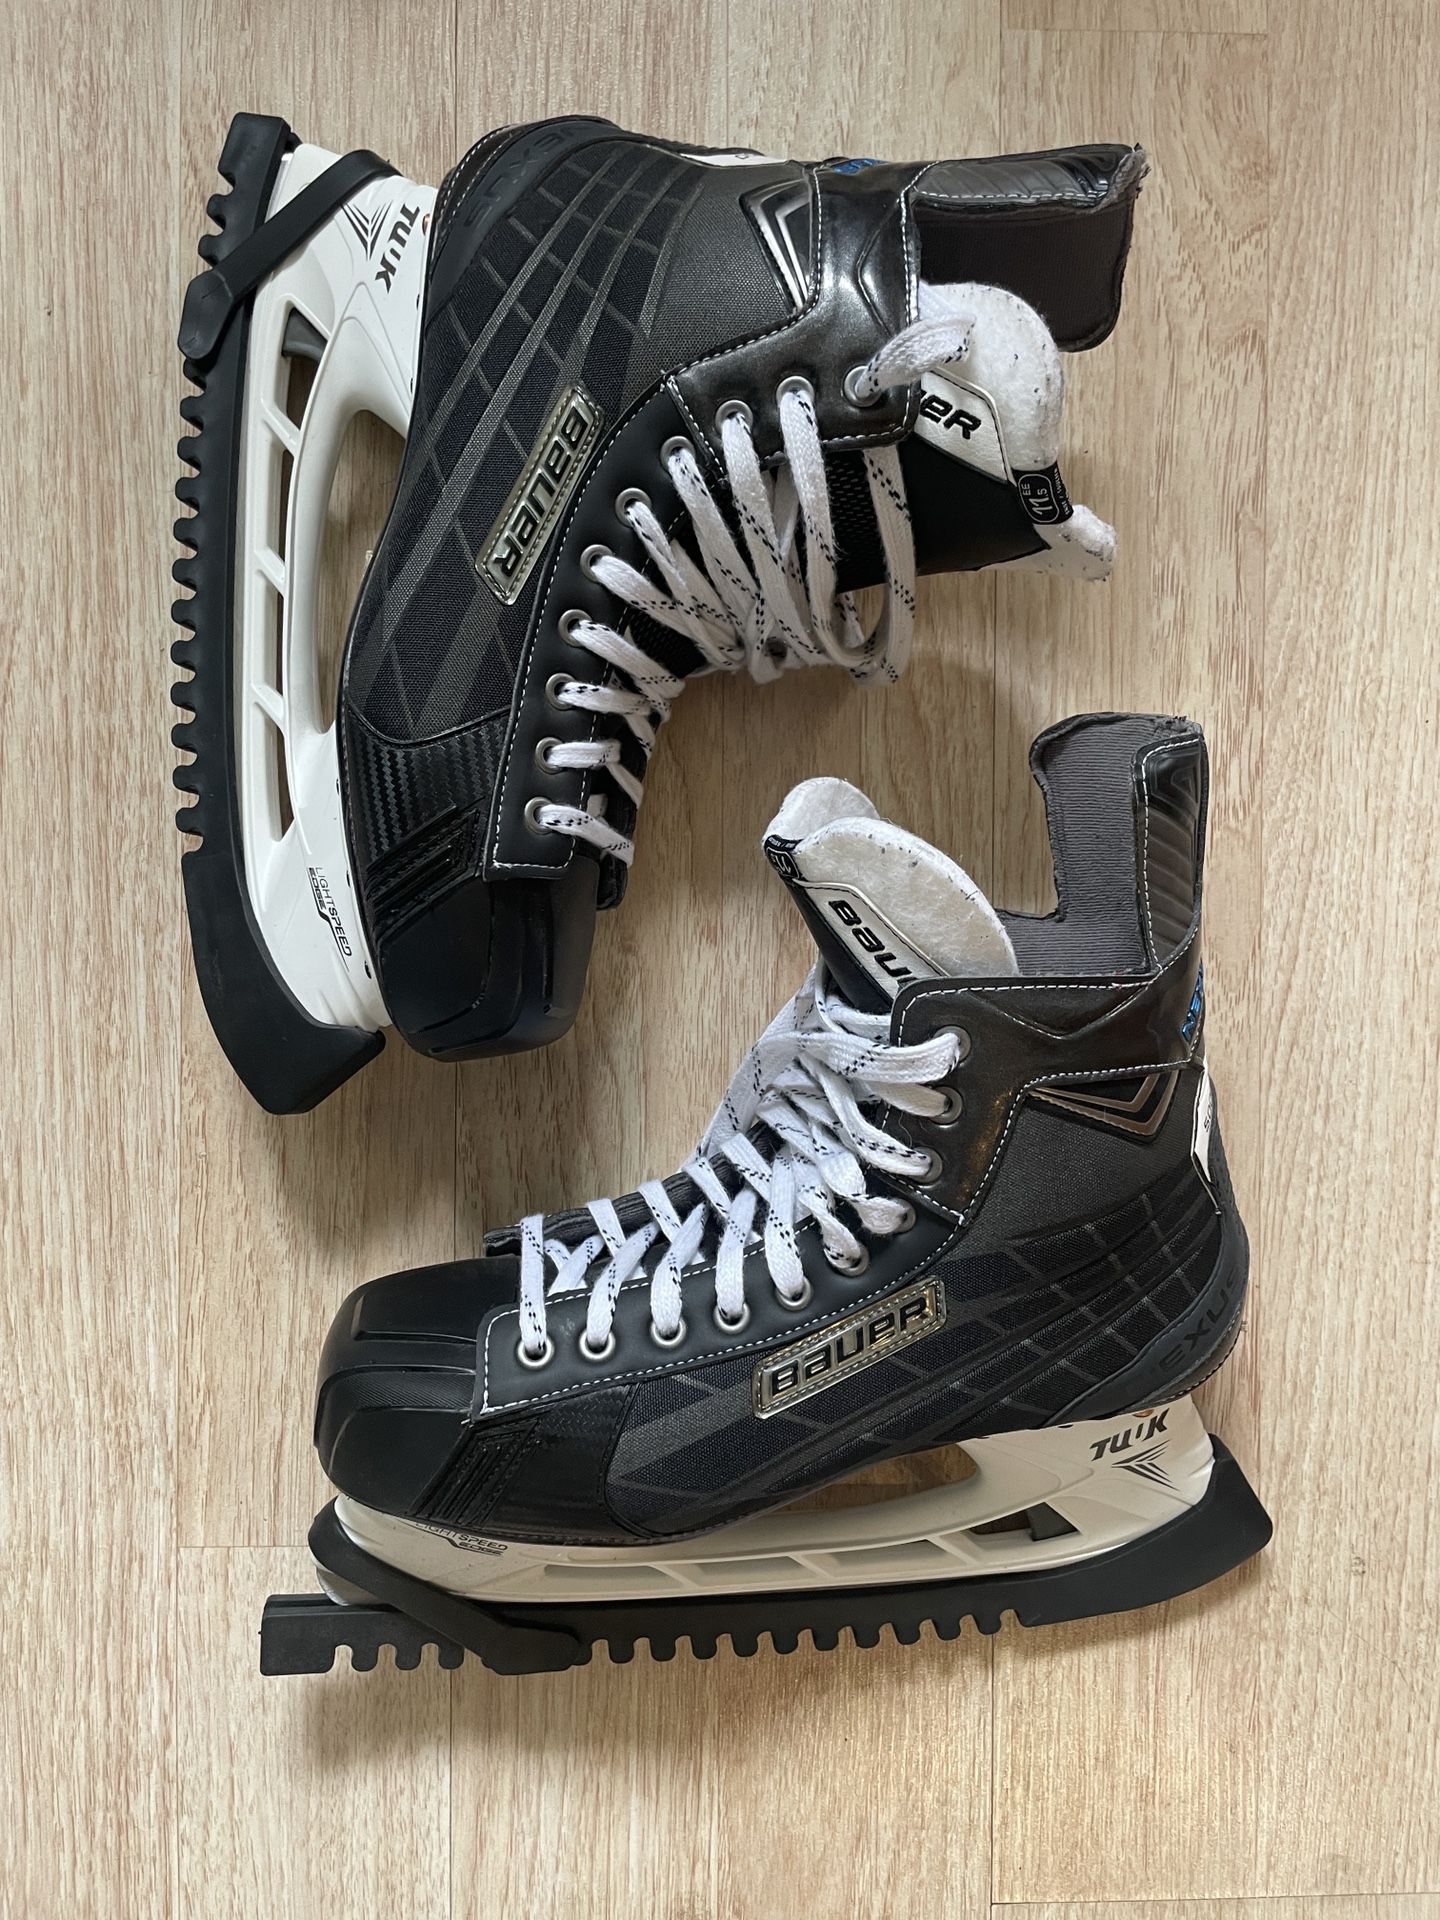 Bauer Nexus 5000 11.5 EE Hockey Skates Double Wide Men’s Size 13